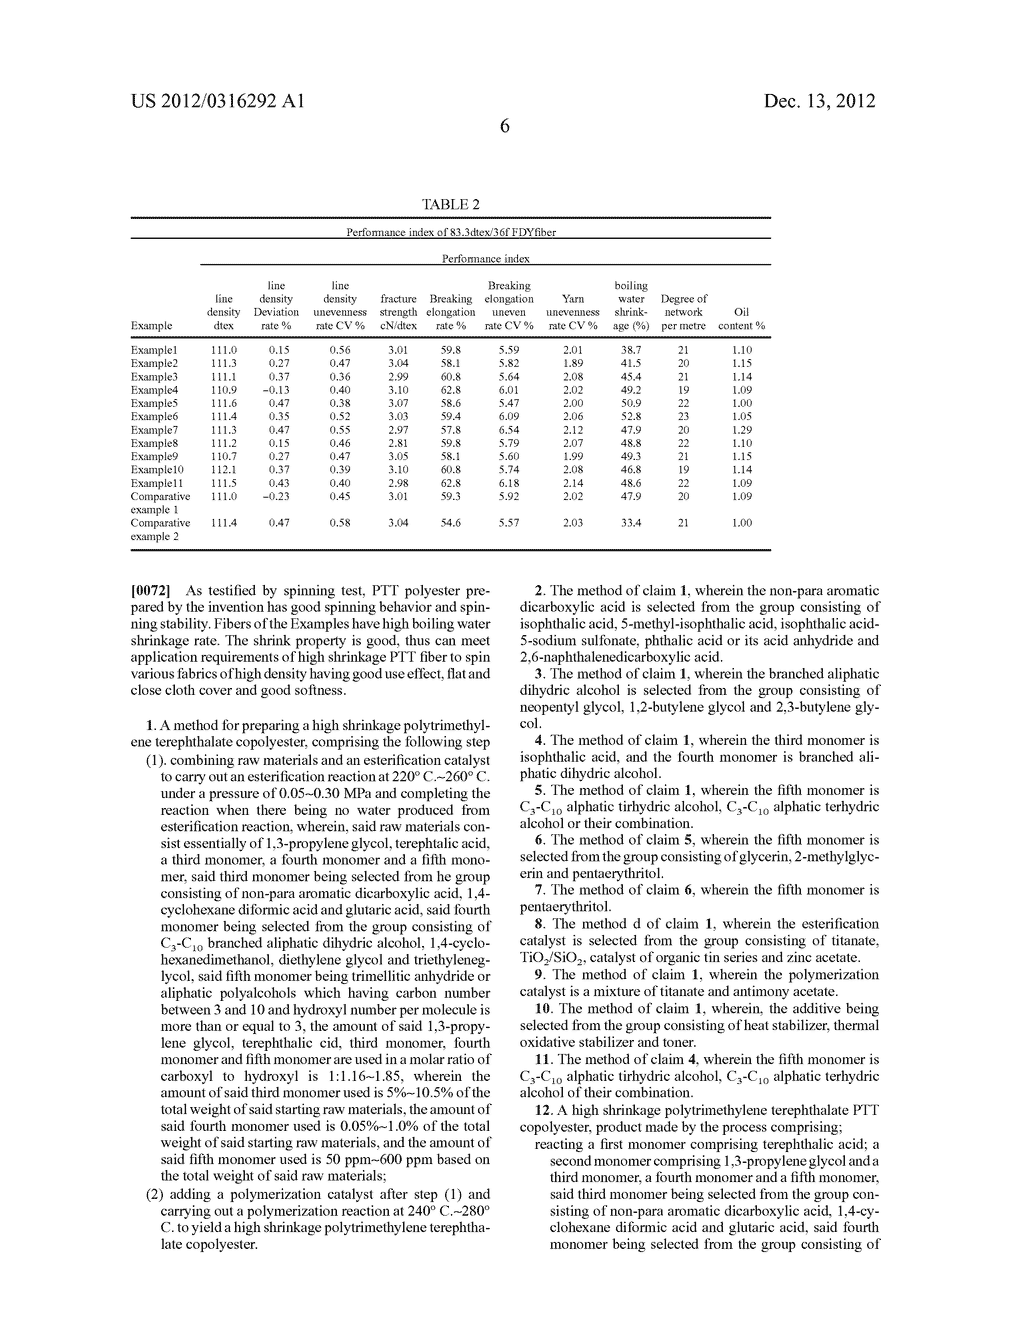 Method for Preparing High Shrinkage Rate PolytrimethyleneTerephthalate - diagram, schematic, and image 07